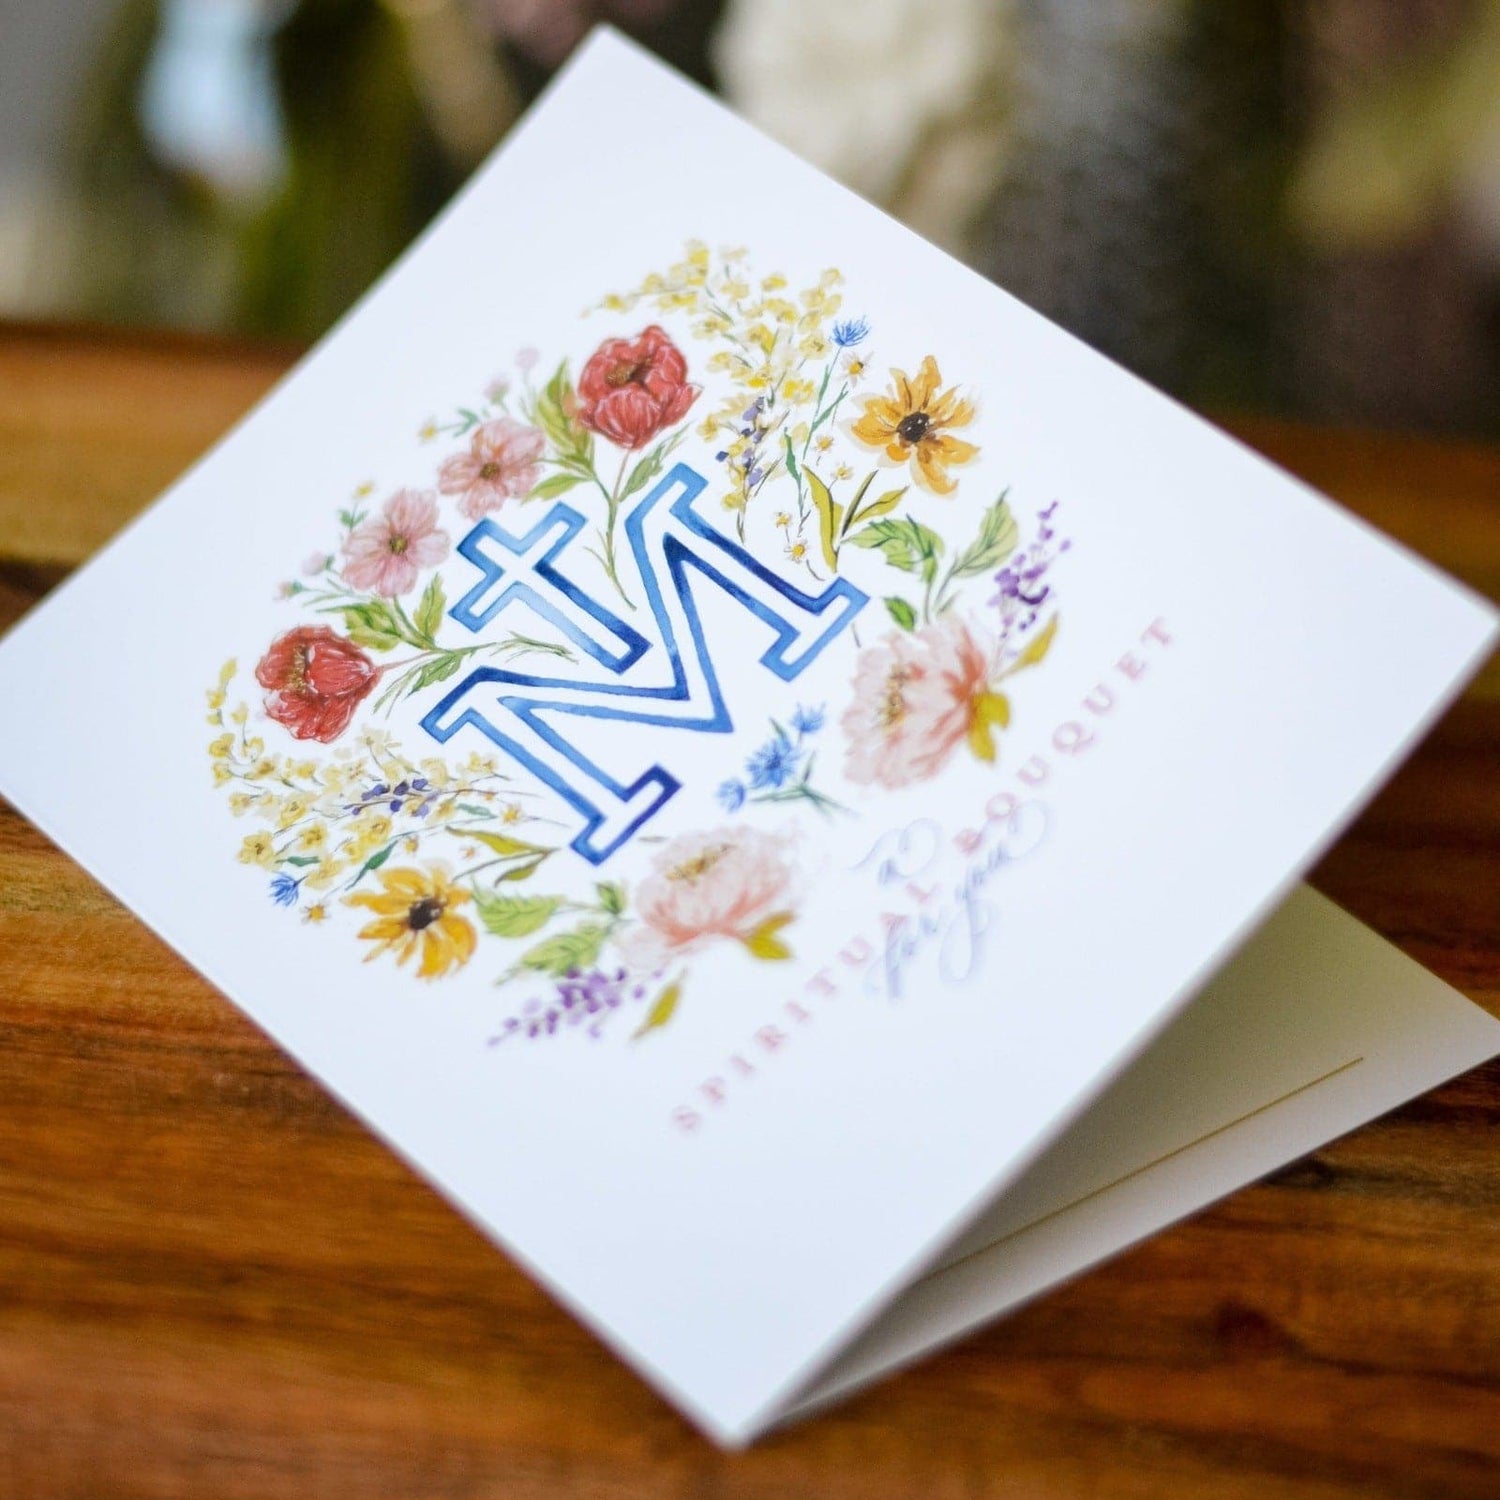 Catholic Spiritual Bouquet Card - Little Way Design Co.